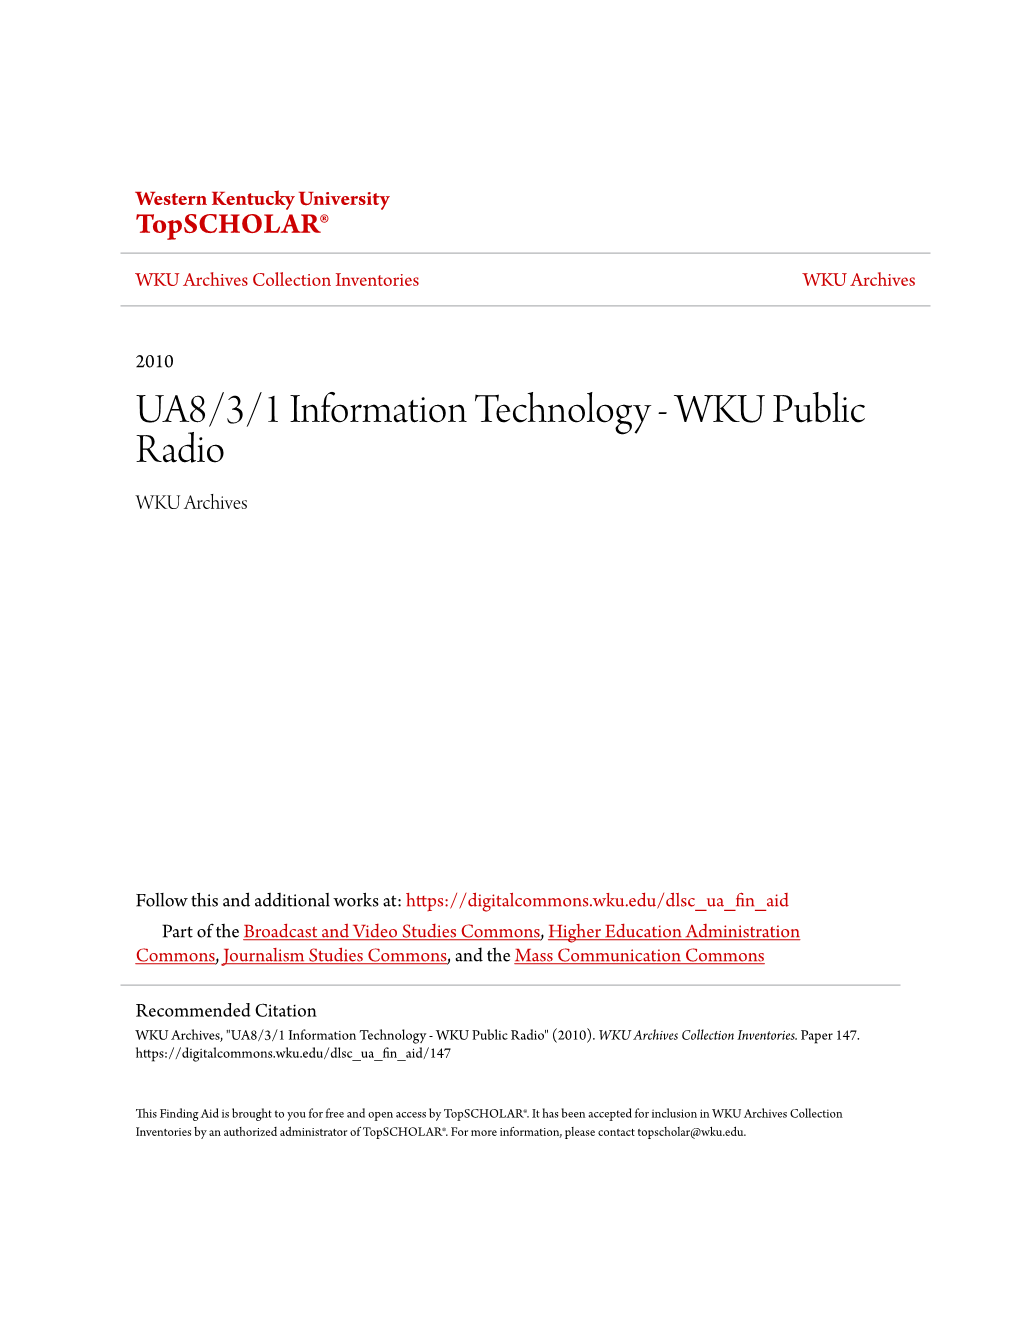 UA8/3/1 Information Technology - WKU Public Radio WKU Archives